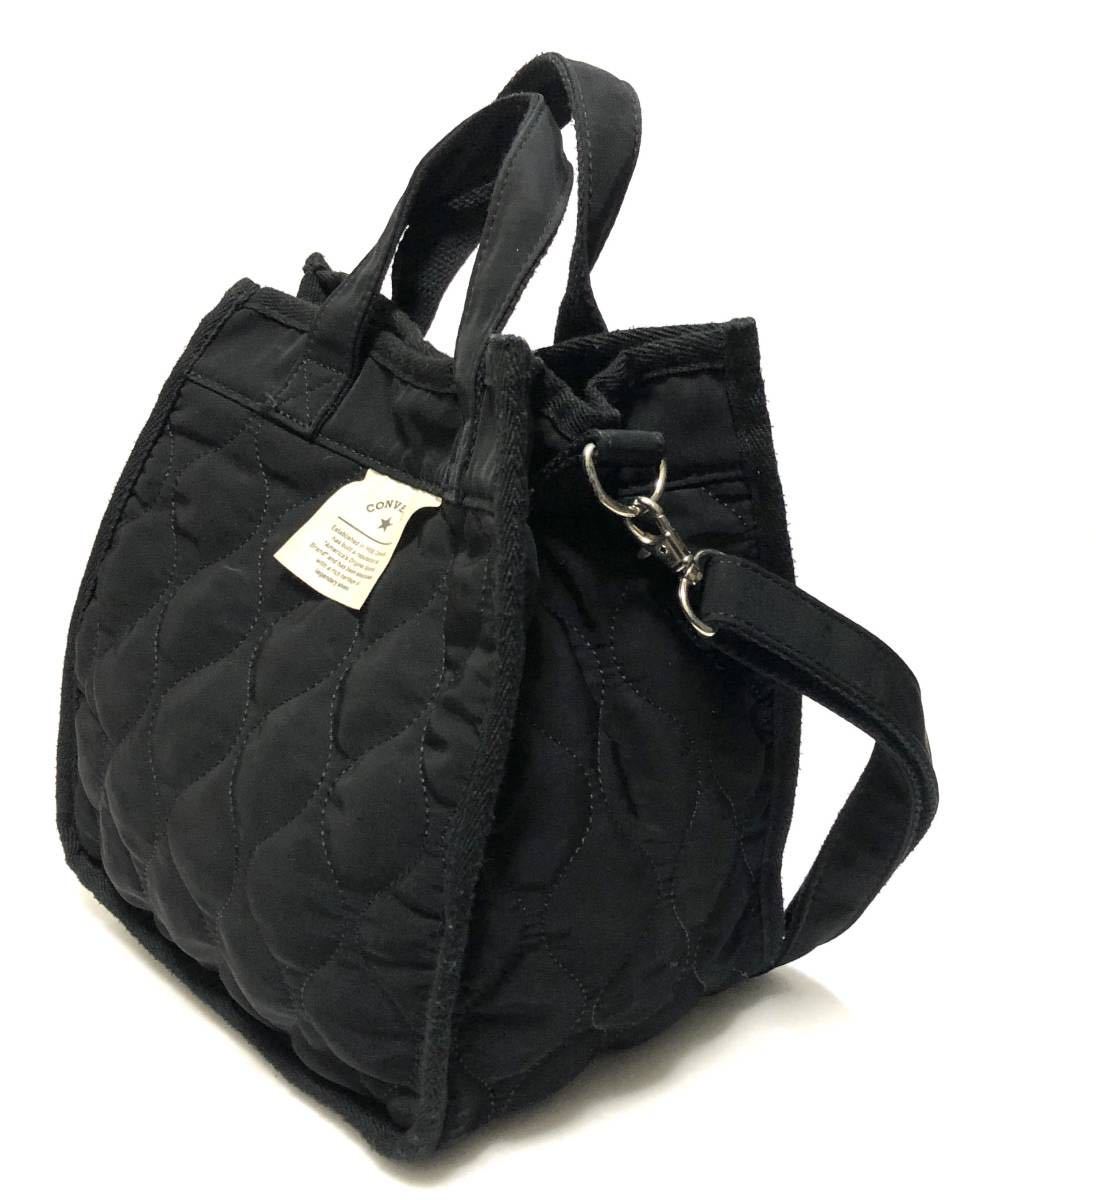  Converse handbag 2312221 shoulder bag 2WAY black black quilting 